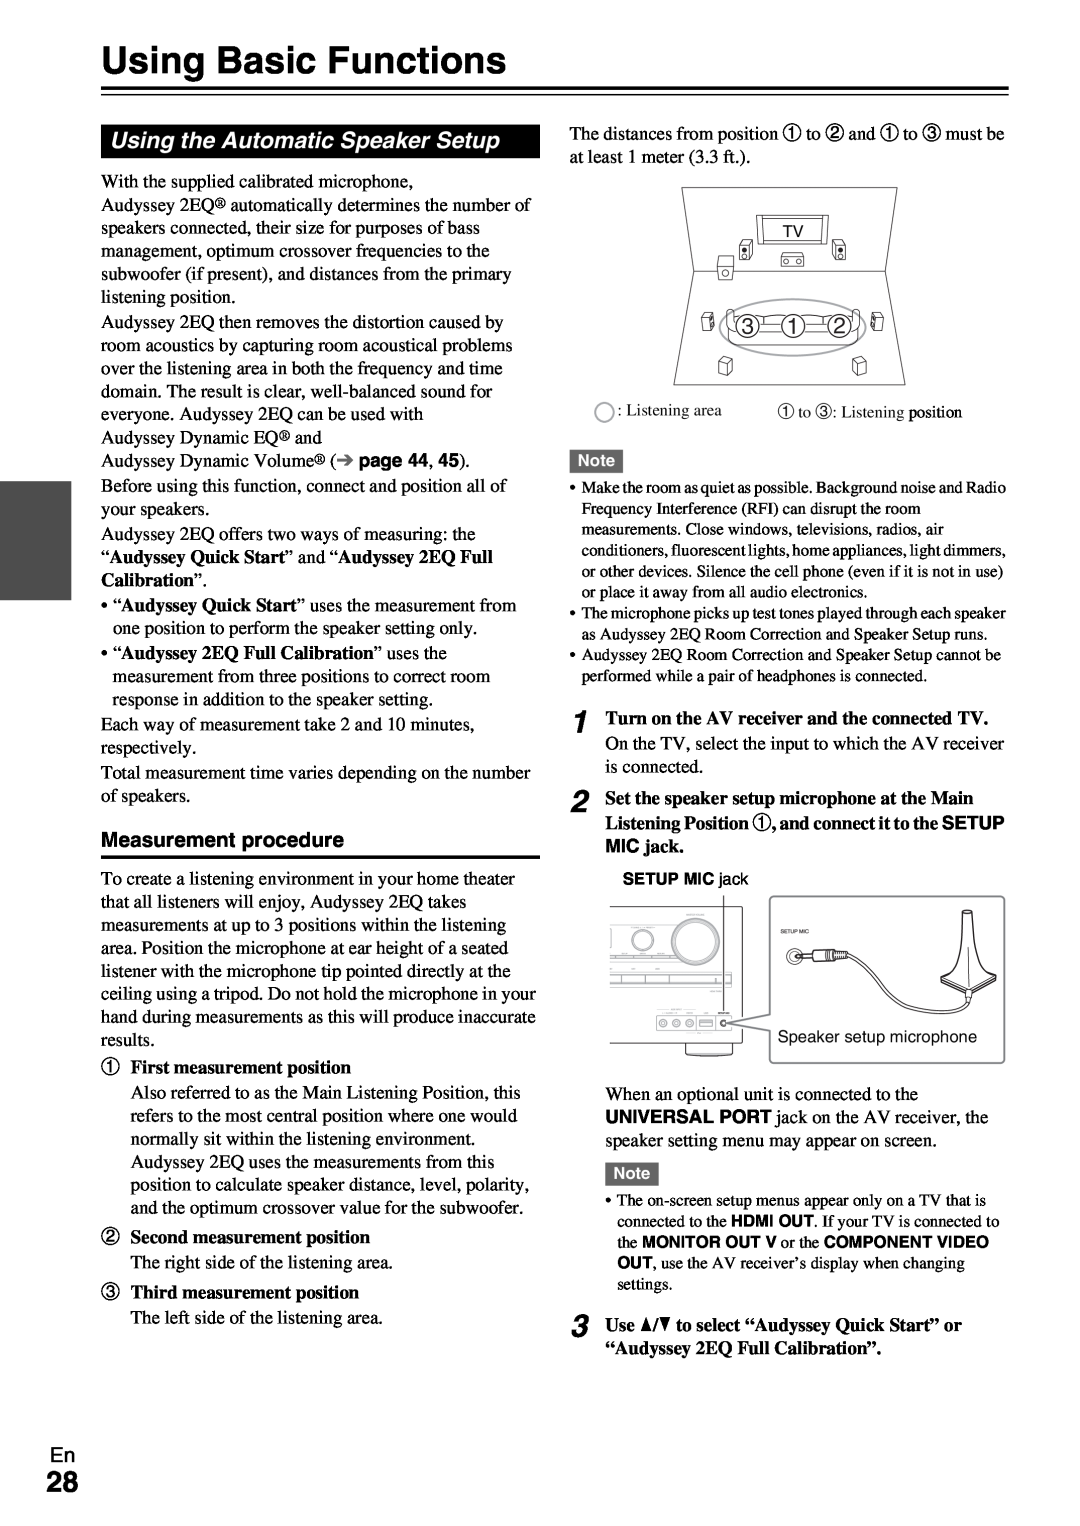 Onkyo TX-NR509 instruction manual Using Basic Functions, c a b, Using the Automatic Speaker Setup, Measurement procedure 